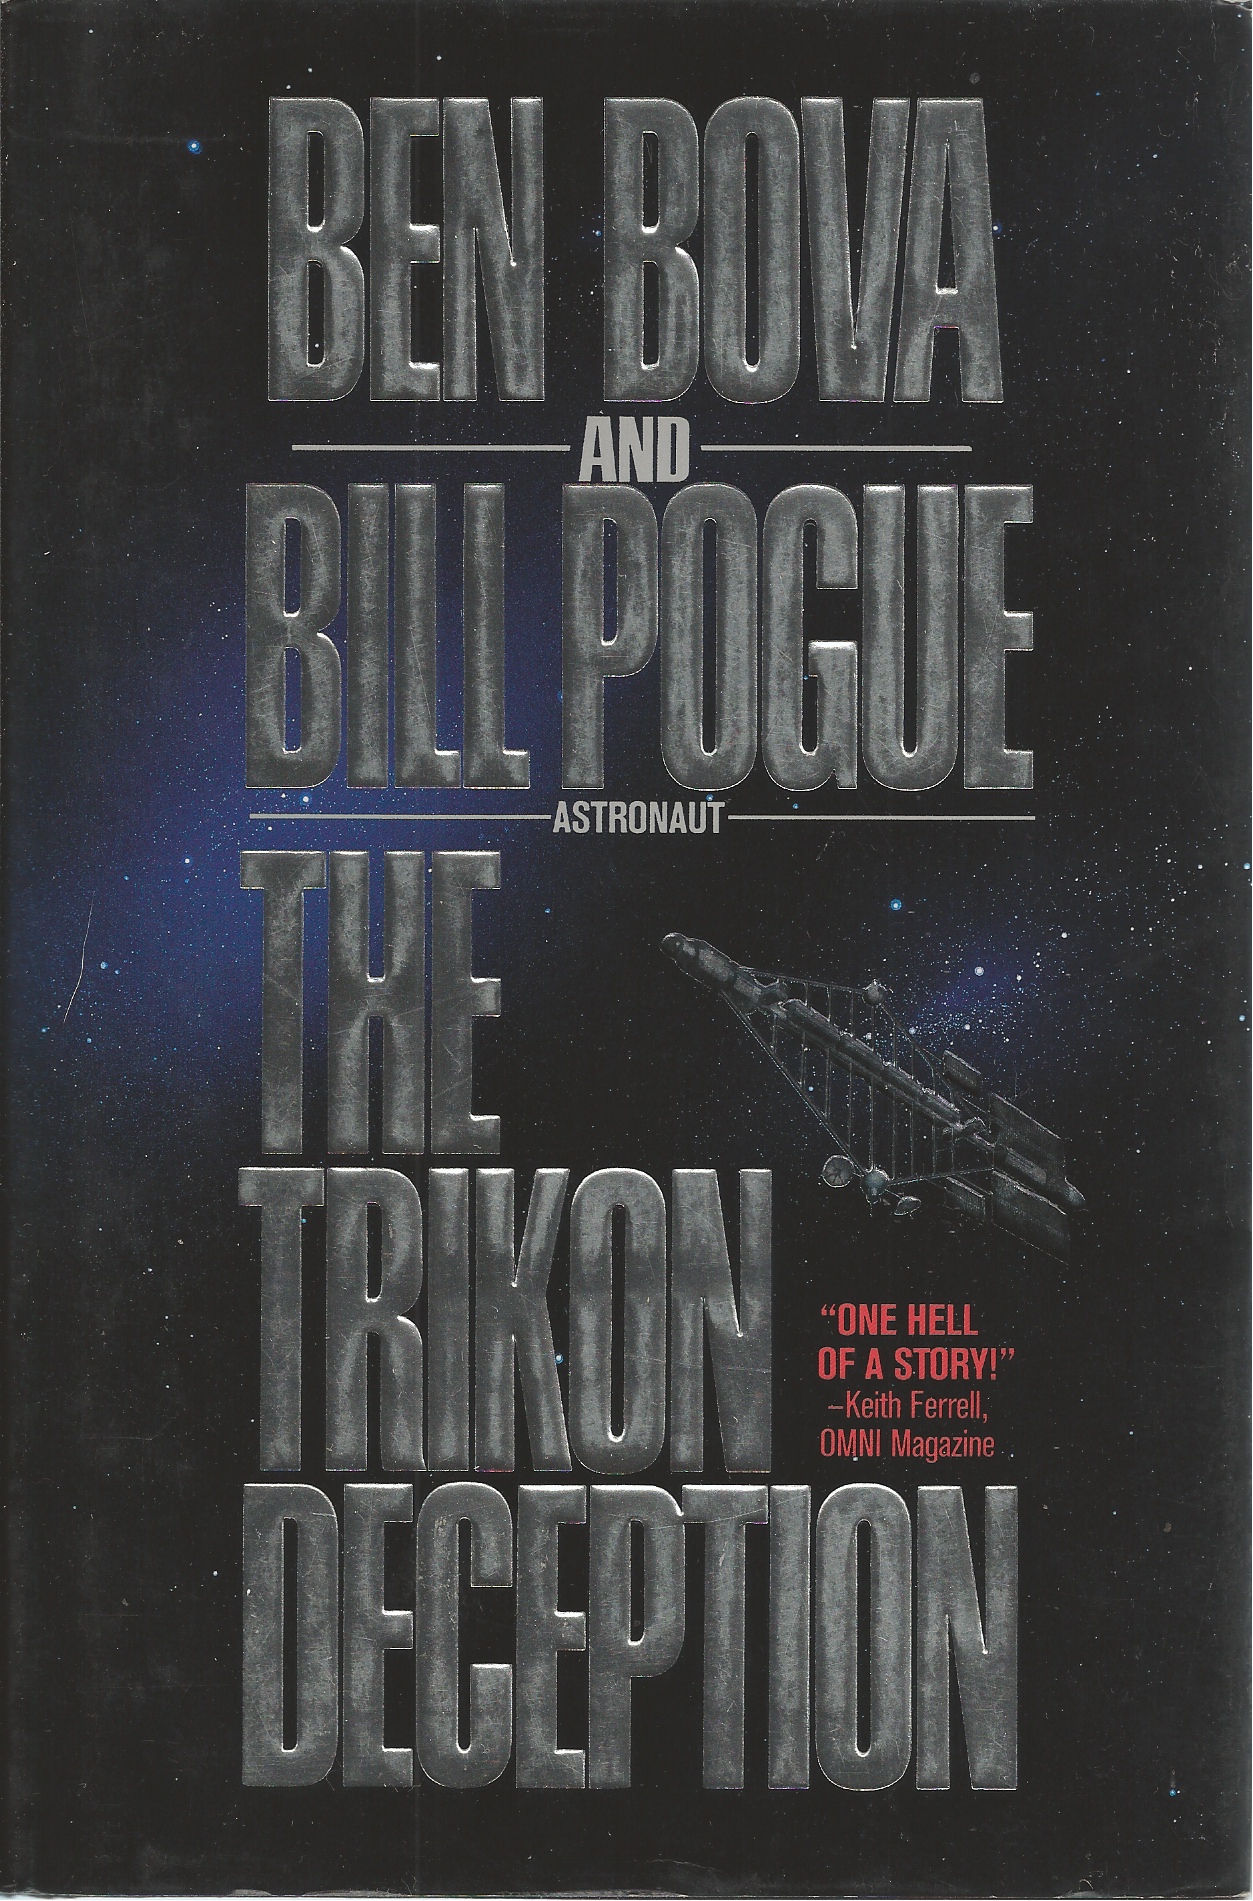 BOVA BEN & POGUE BILL - Trikon Deception, the